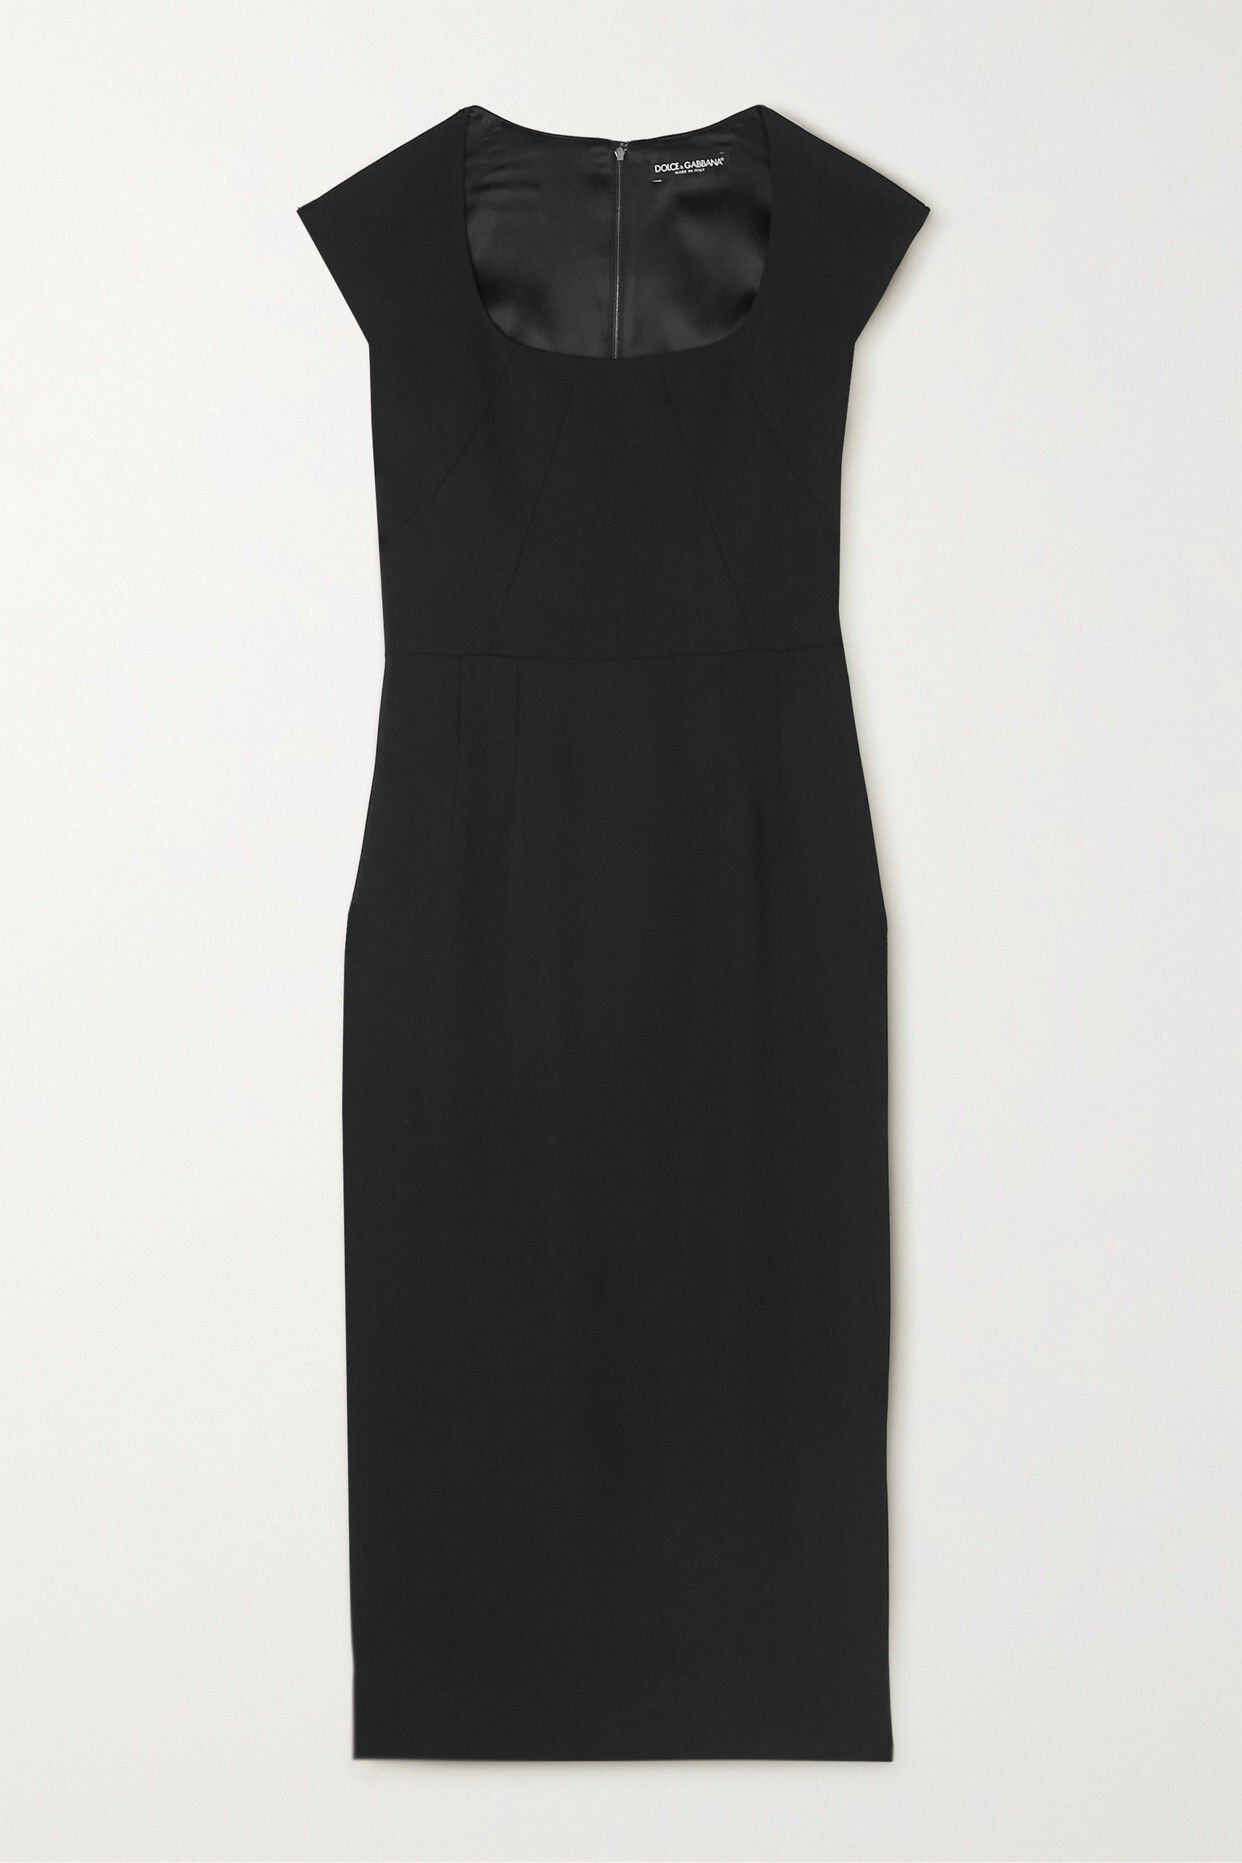 Dolce & Gabbana - Cady Midi Dress - Black